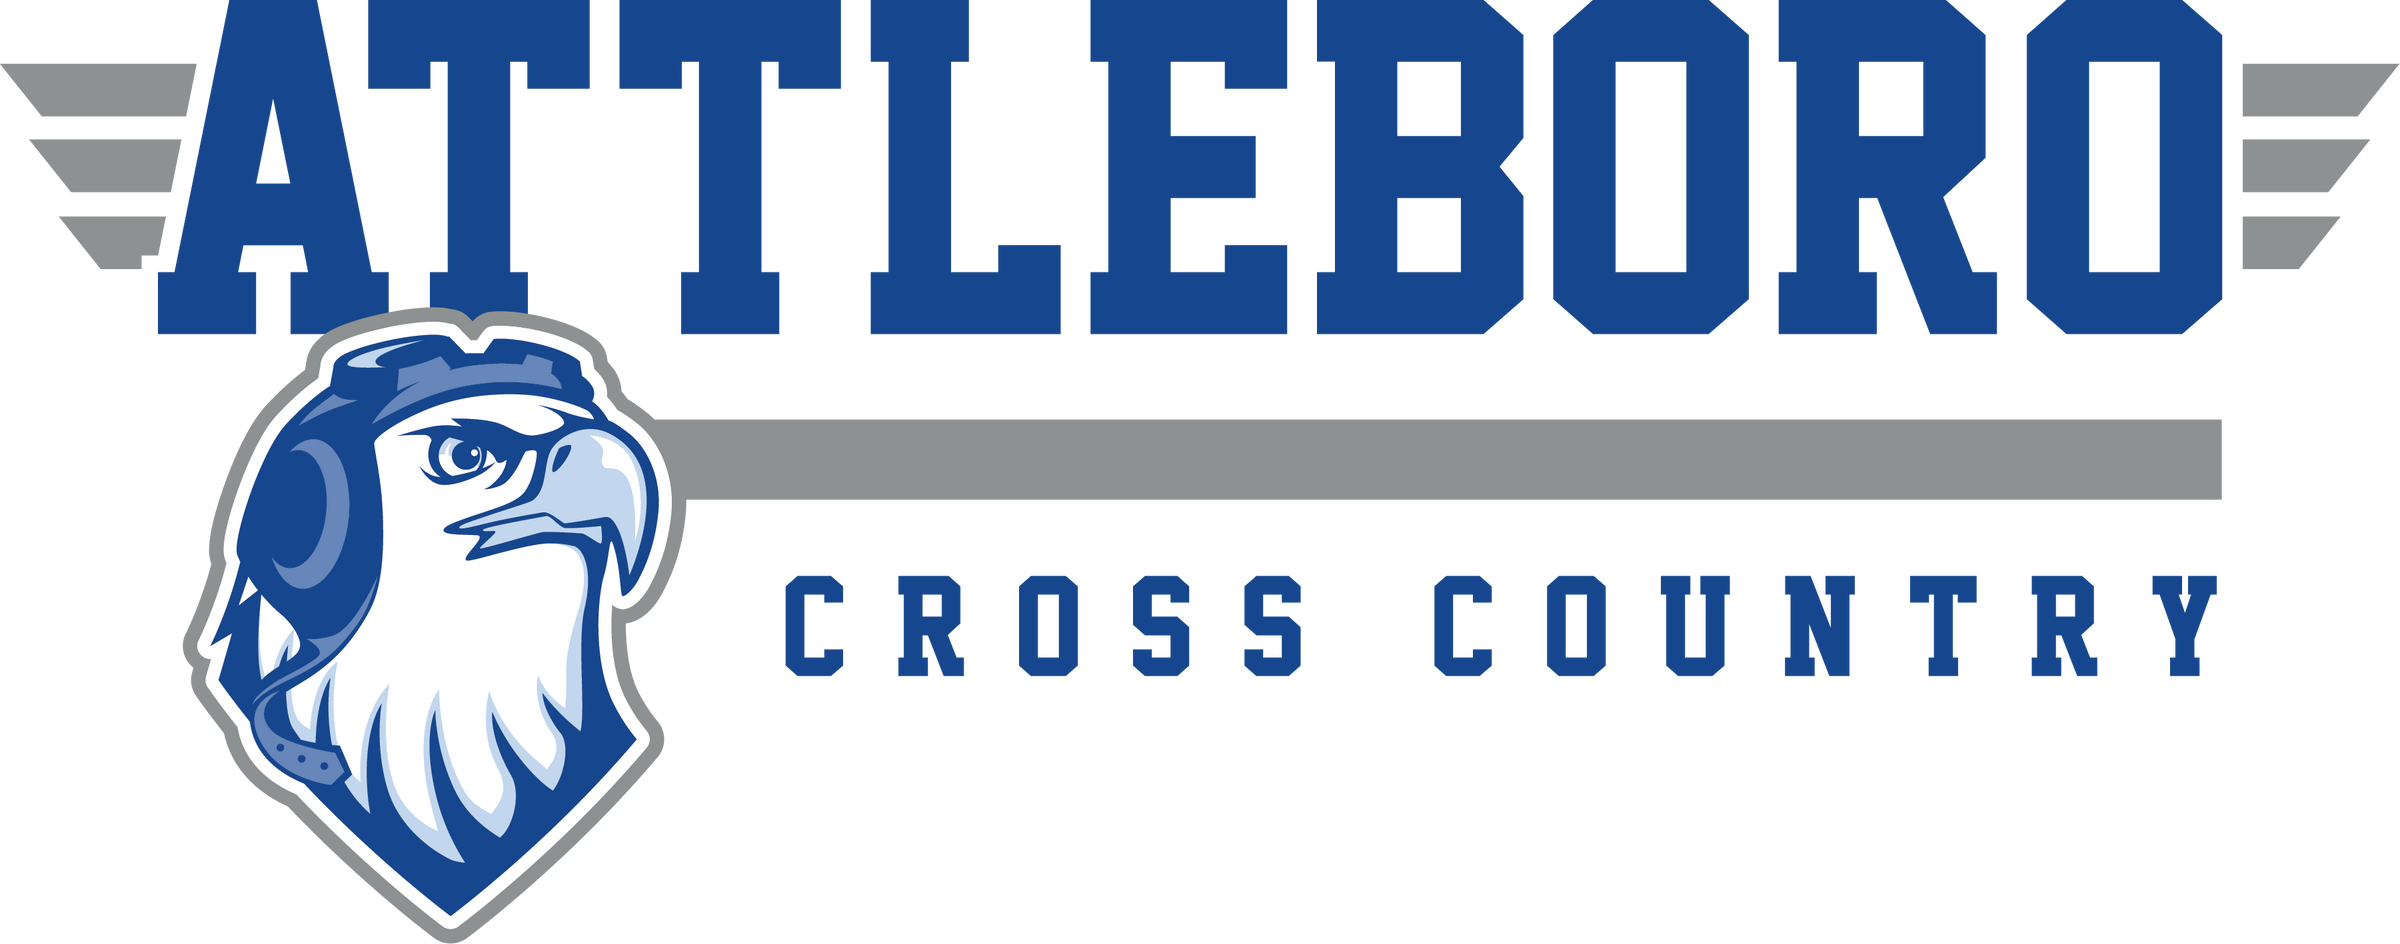 Attleboro Cross Country